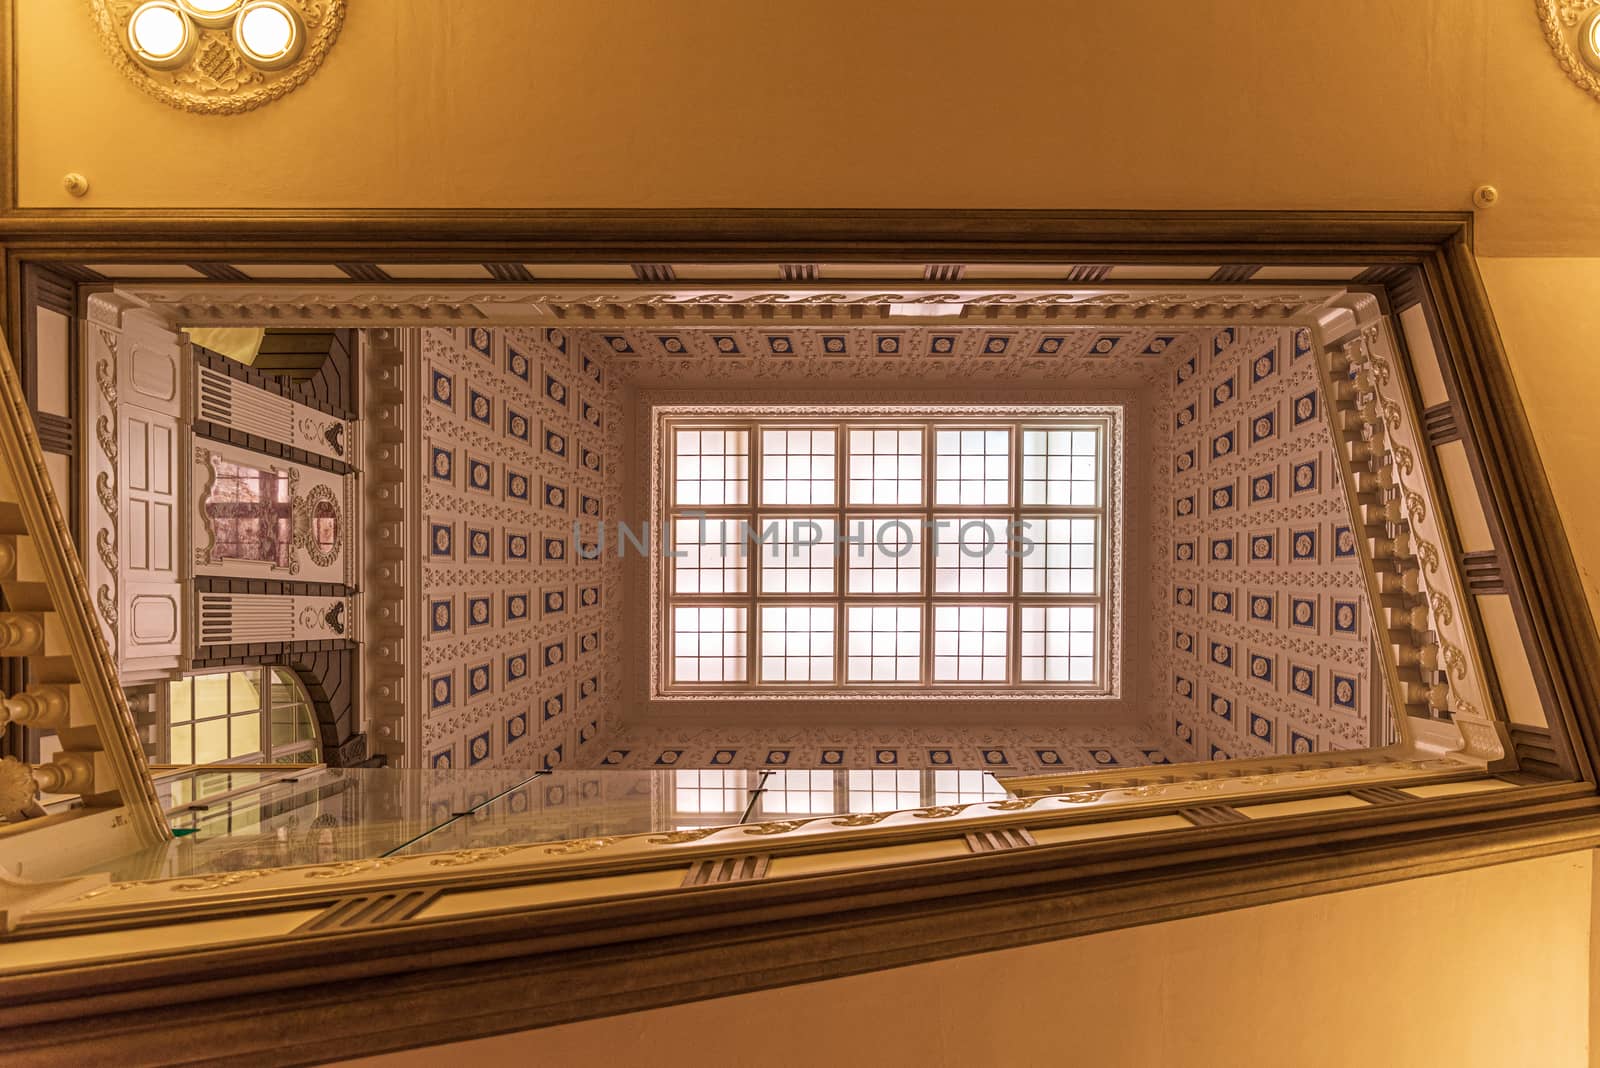 Interiors of royal halls in Christiansborg Palace in Copenhagen  by brambillasimone